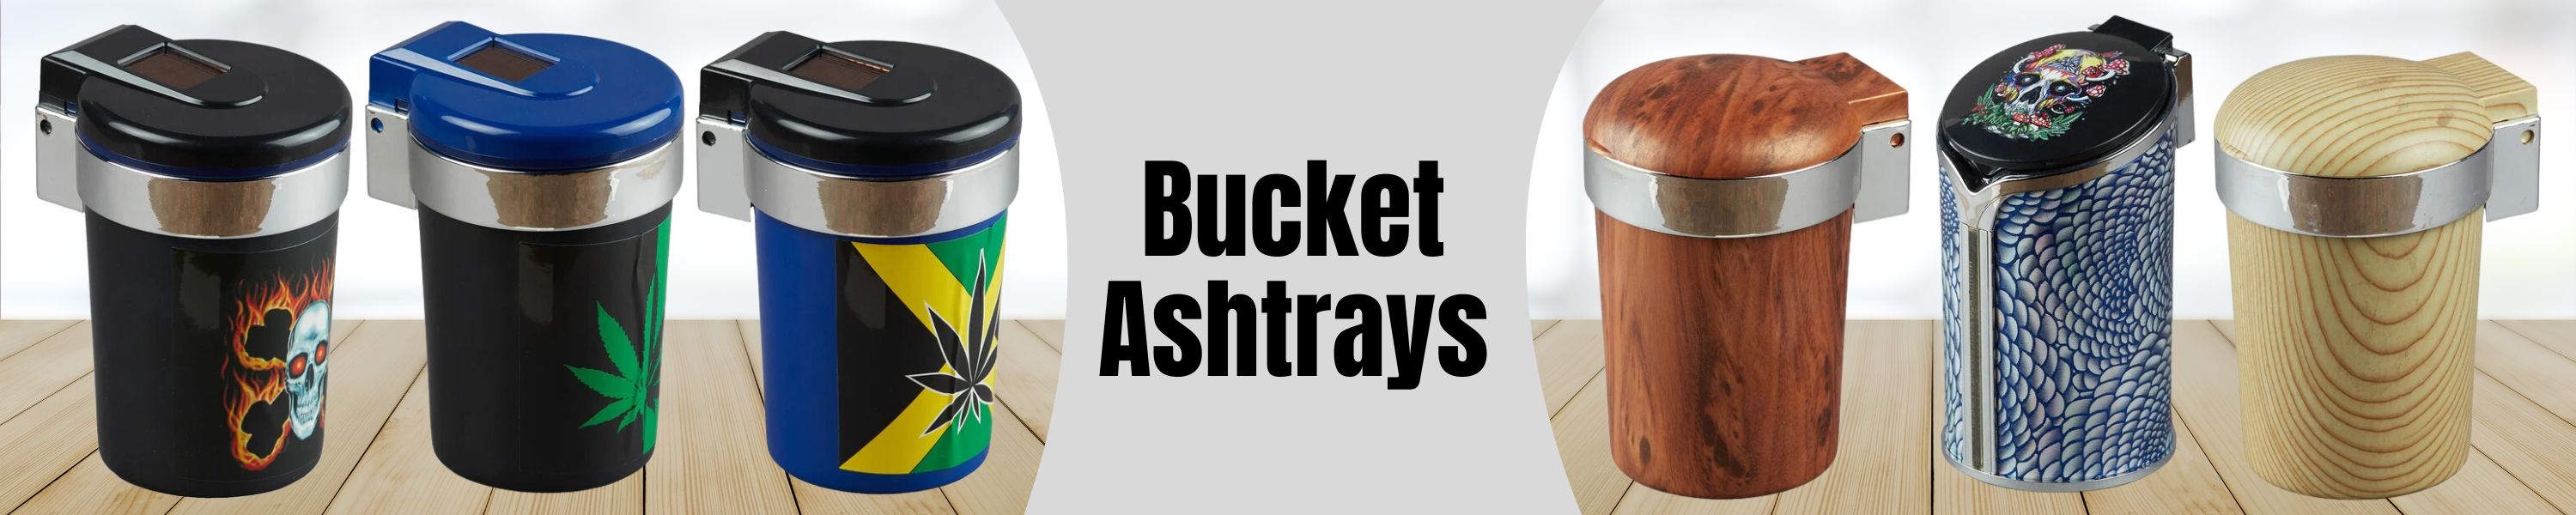 Bucket Ashtrays